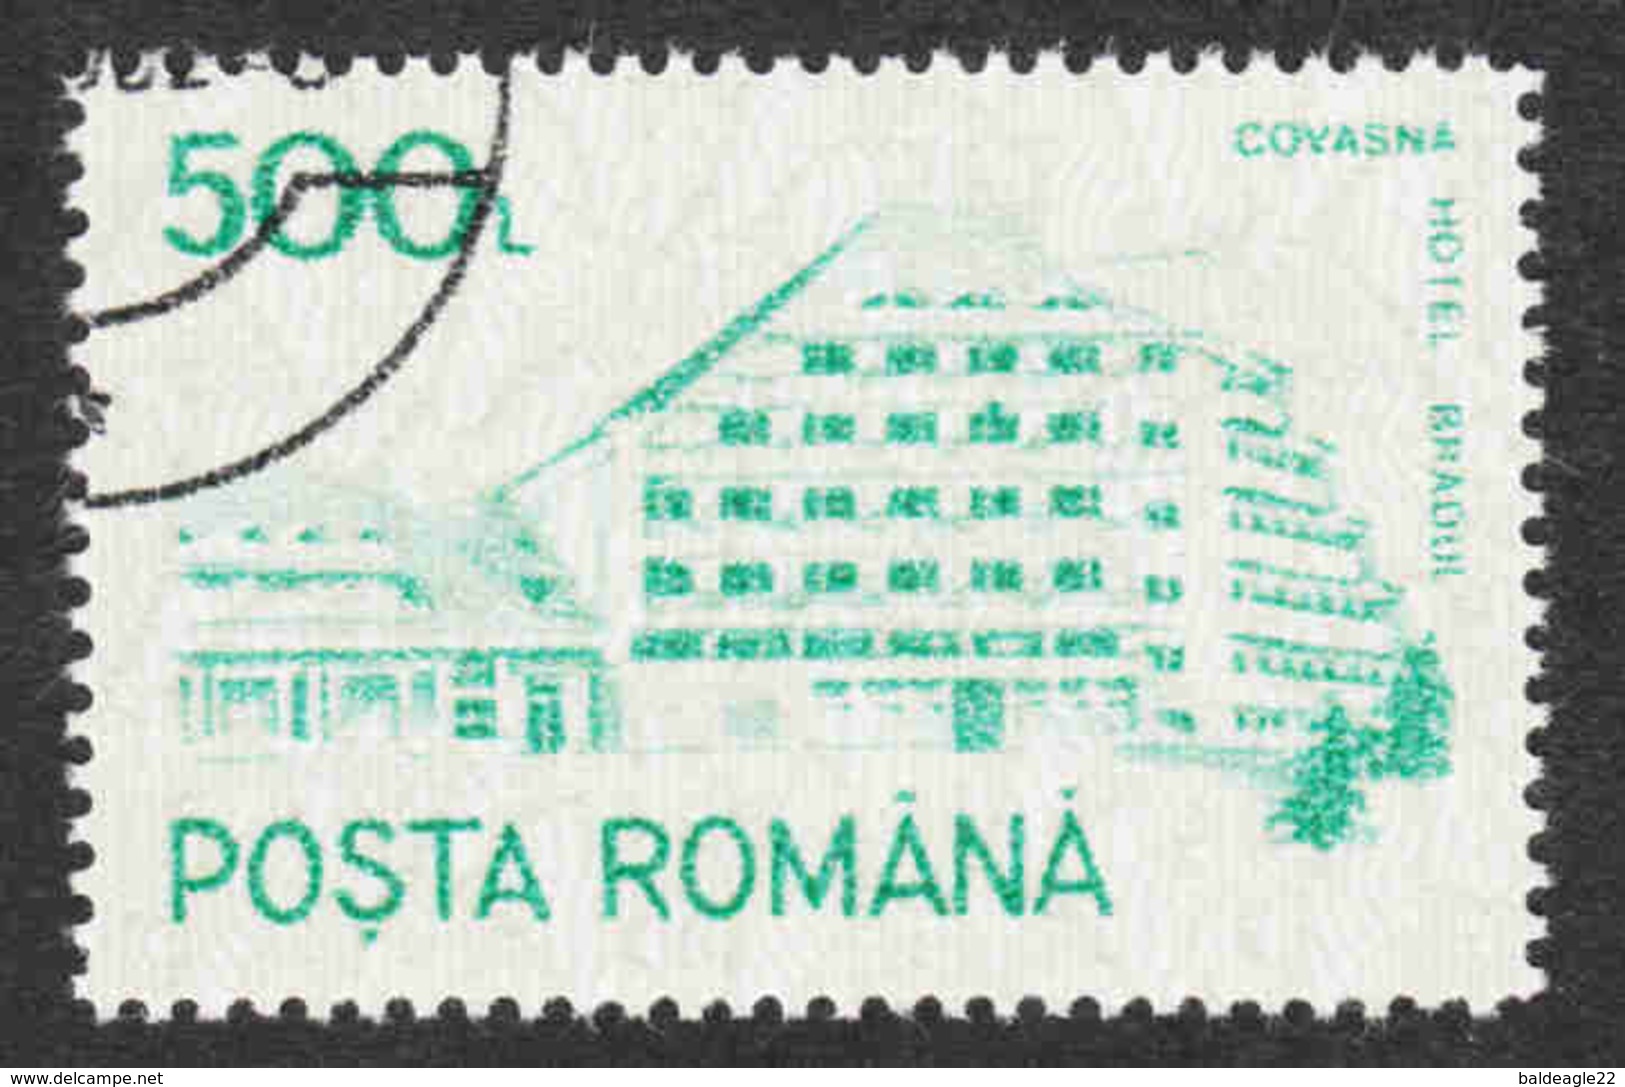 Romania - Scott #3683 CTO - Full Gum - Never Hinged (3) - Used Stamps